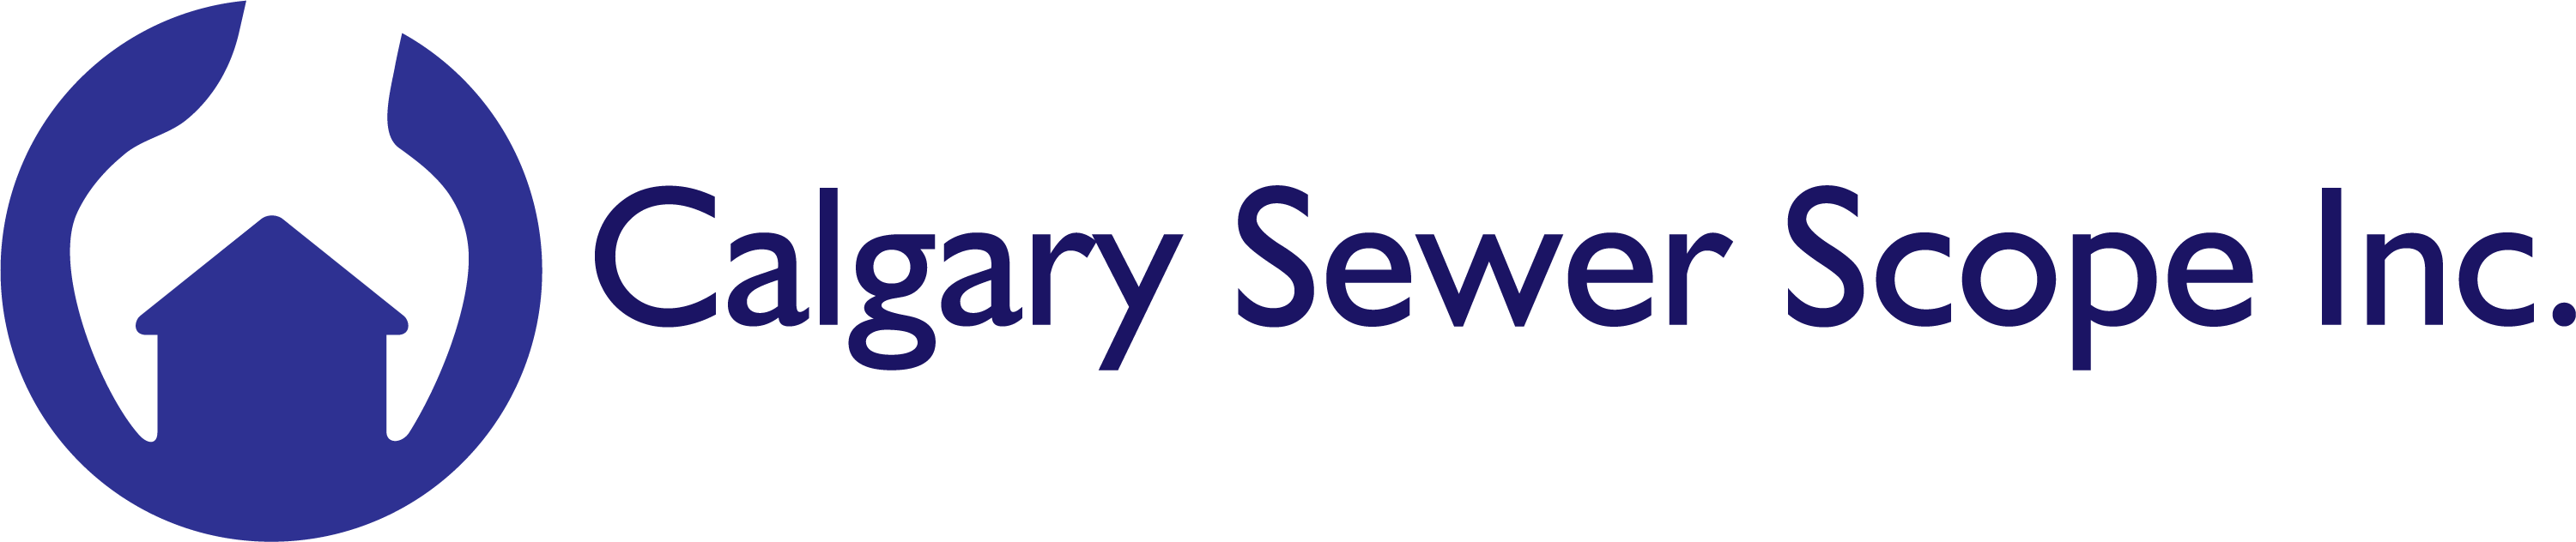 calgary-sewer-scope-logo